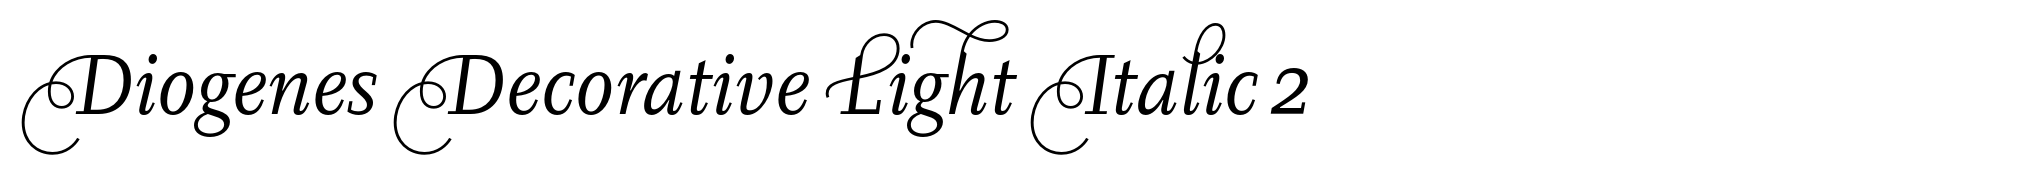 Diogenes Decorative Light Italic 2 image